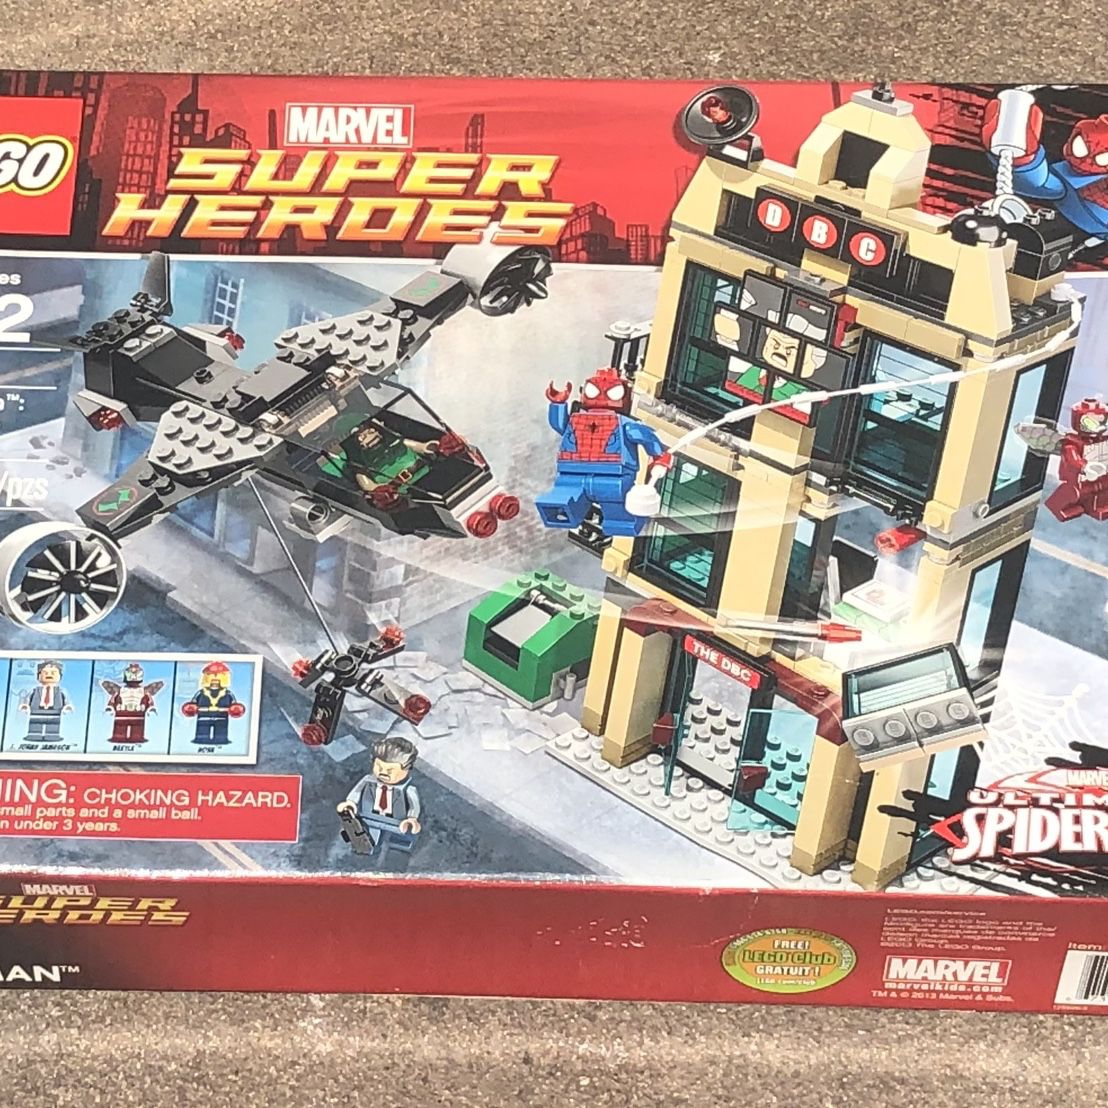 LEGO Marvel Super Heroes Spider-Man: Daily Bugle Showdown Set 76005 - US